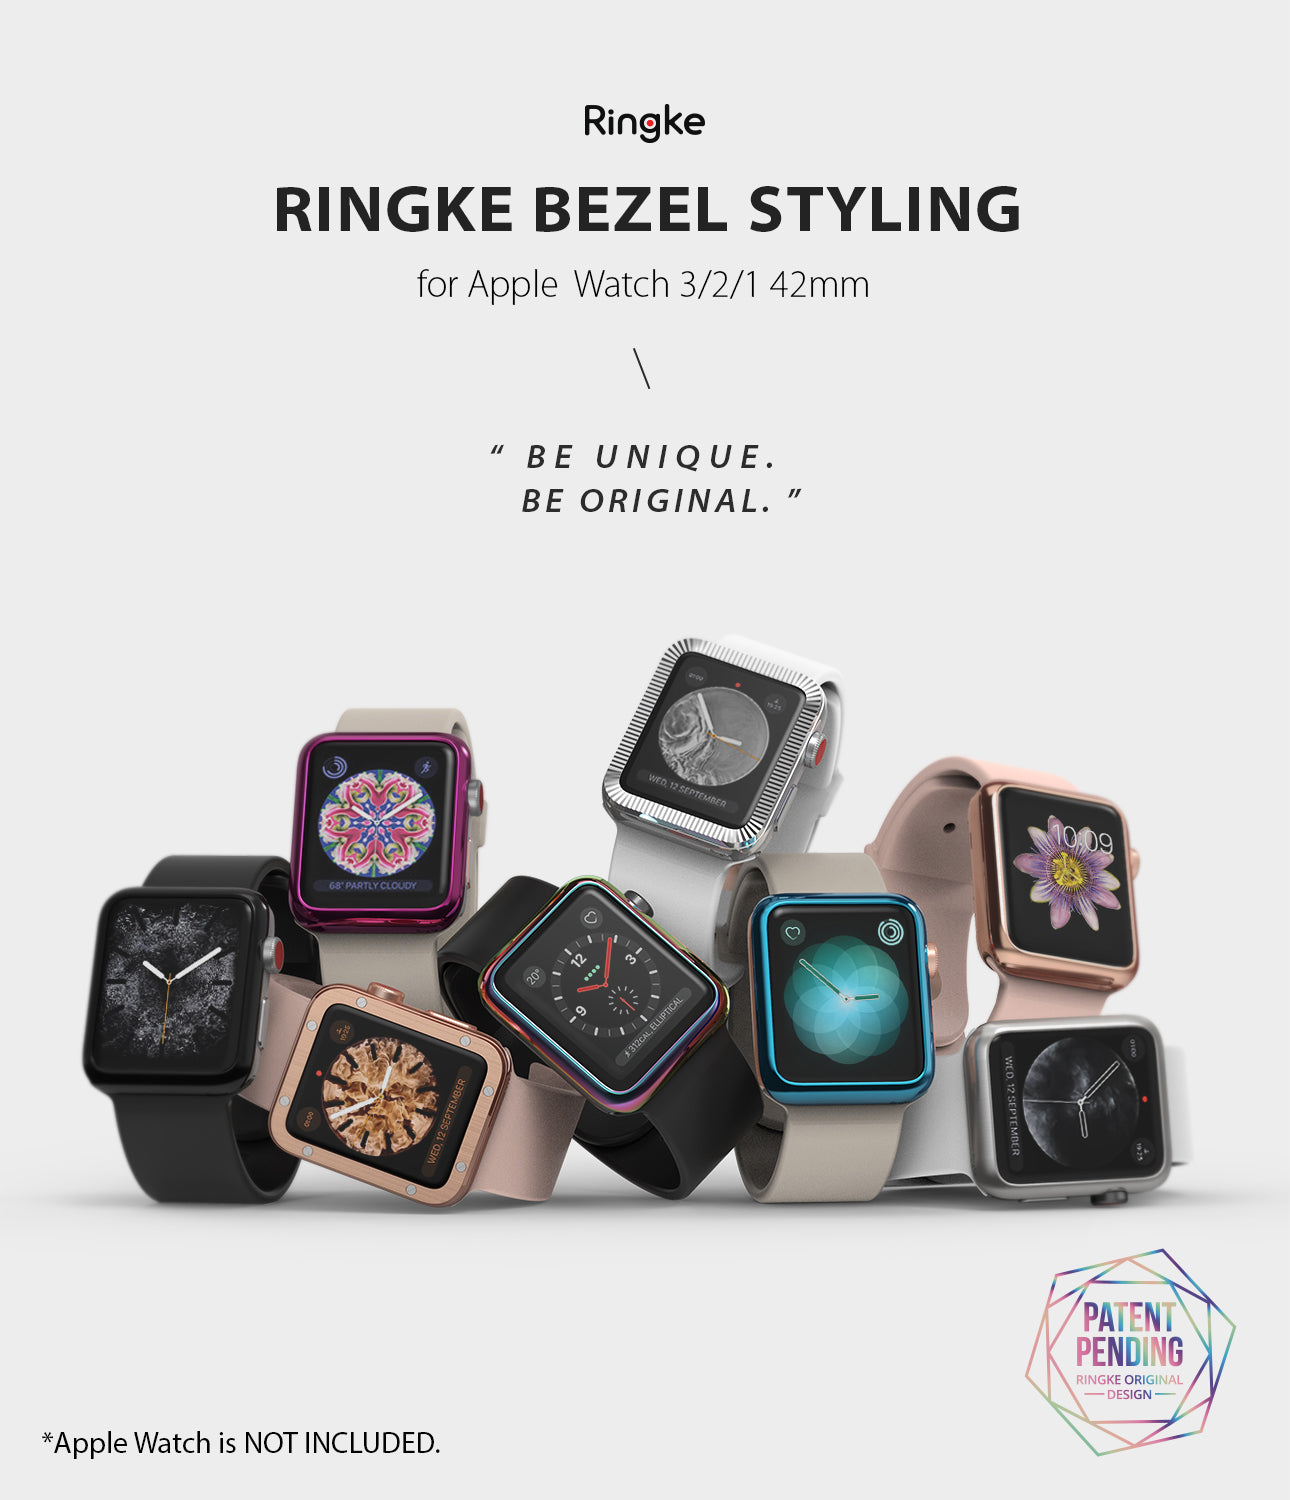 apple watch 3 2 1 42mm case ringke bezel styling stainless steel frame cover 42-40